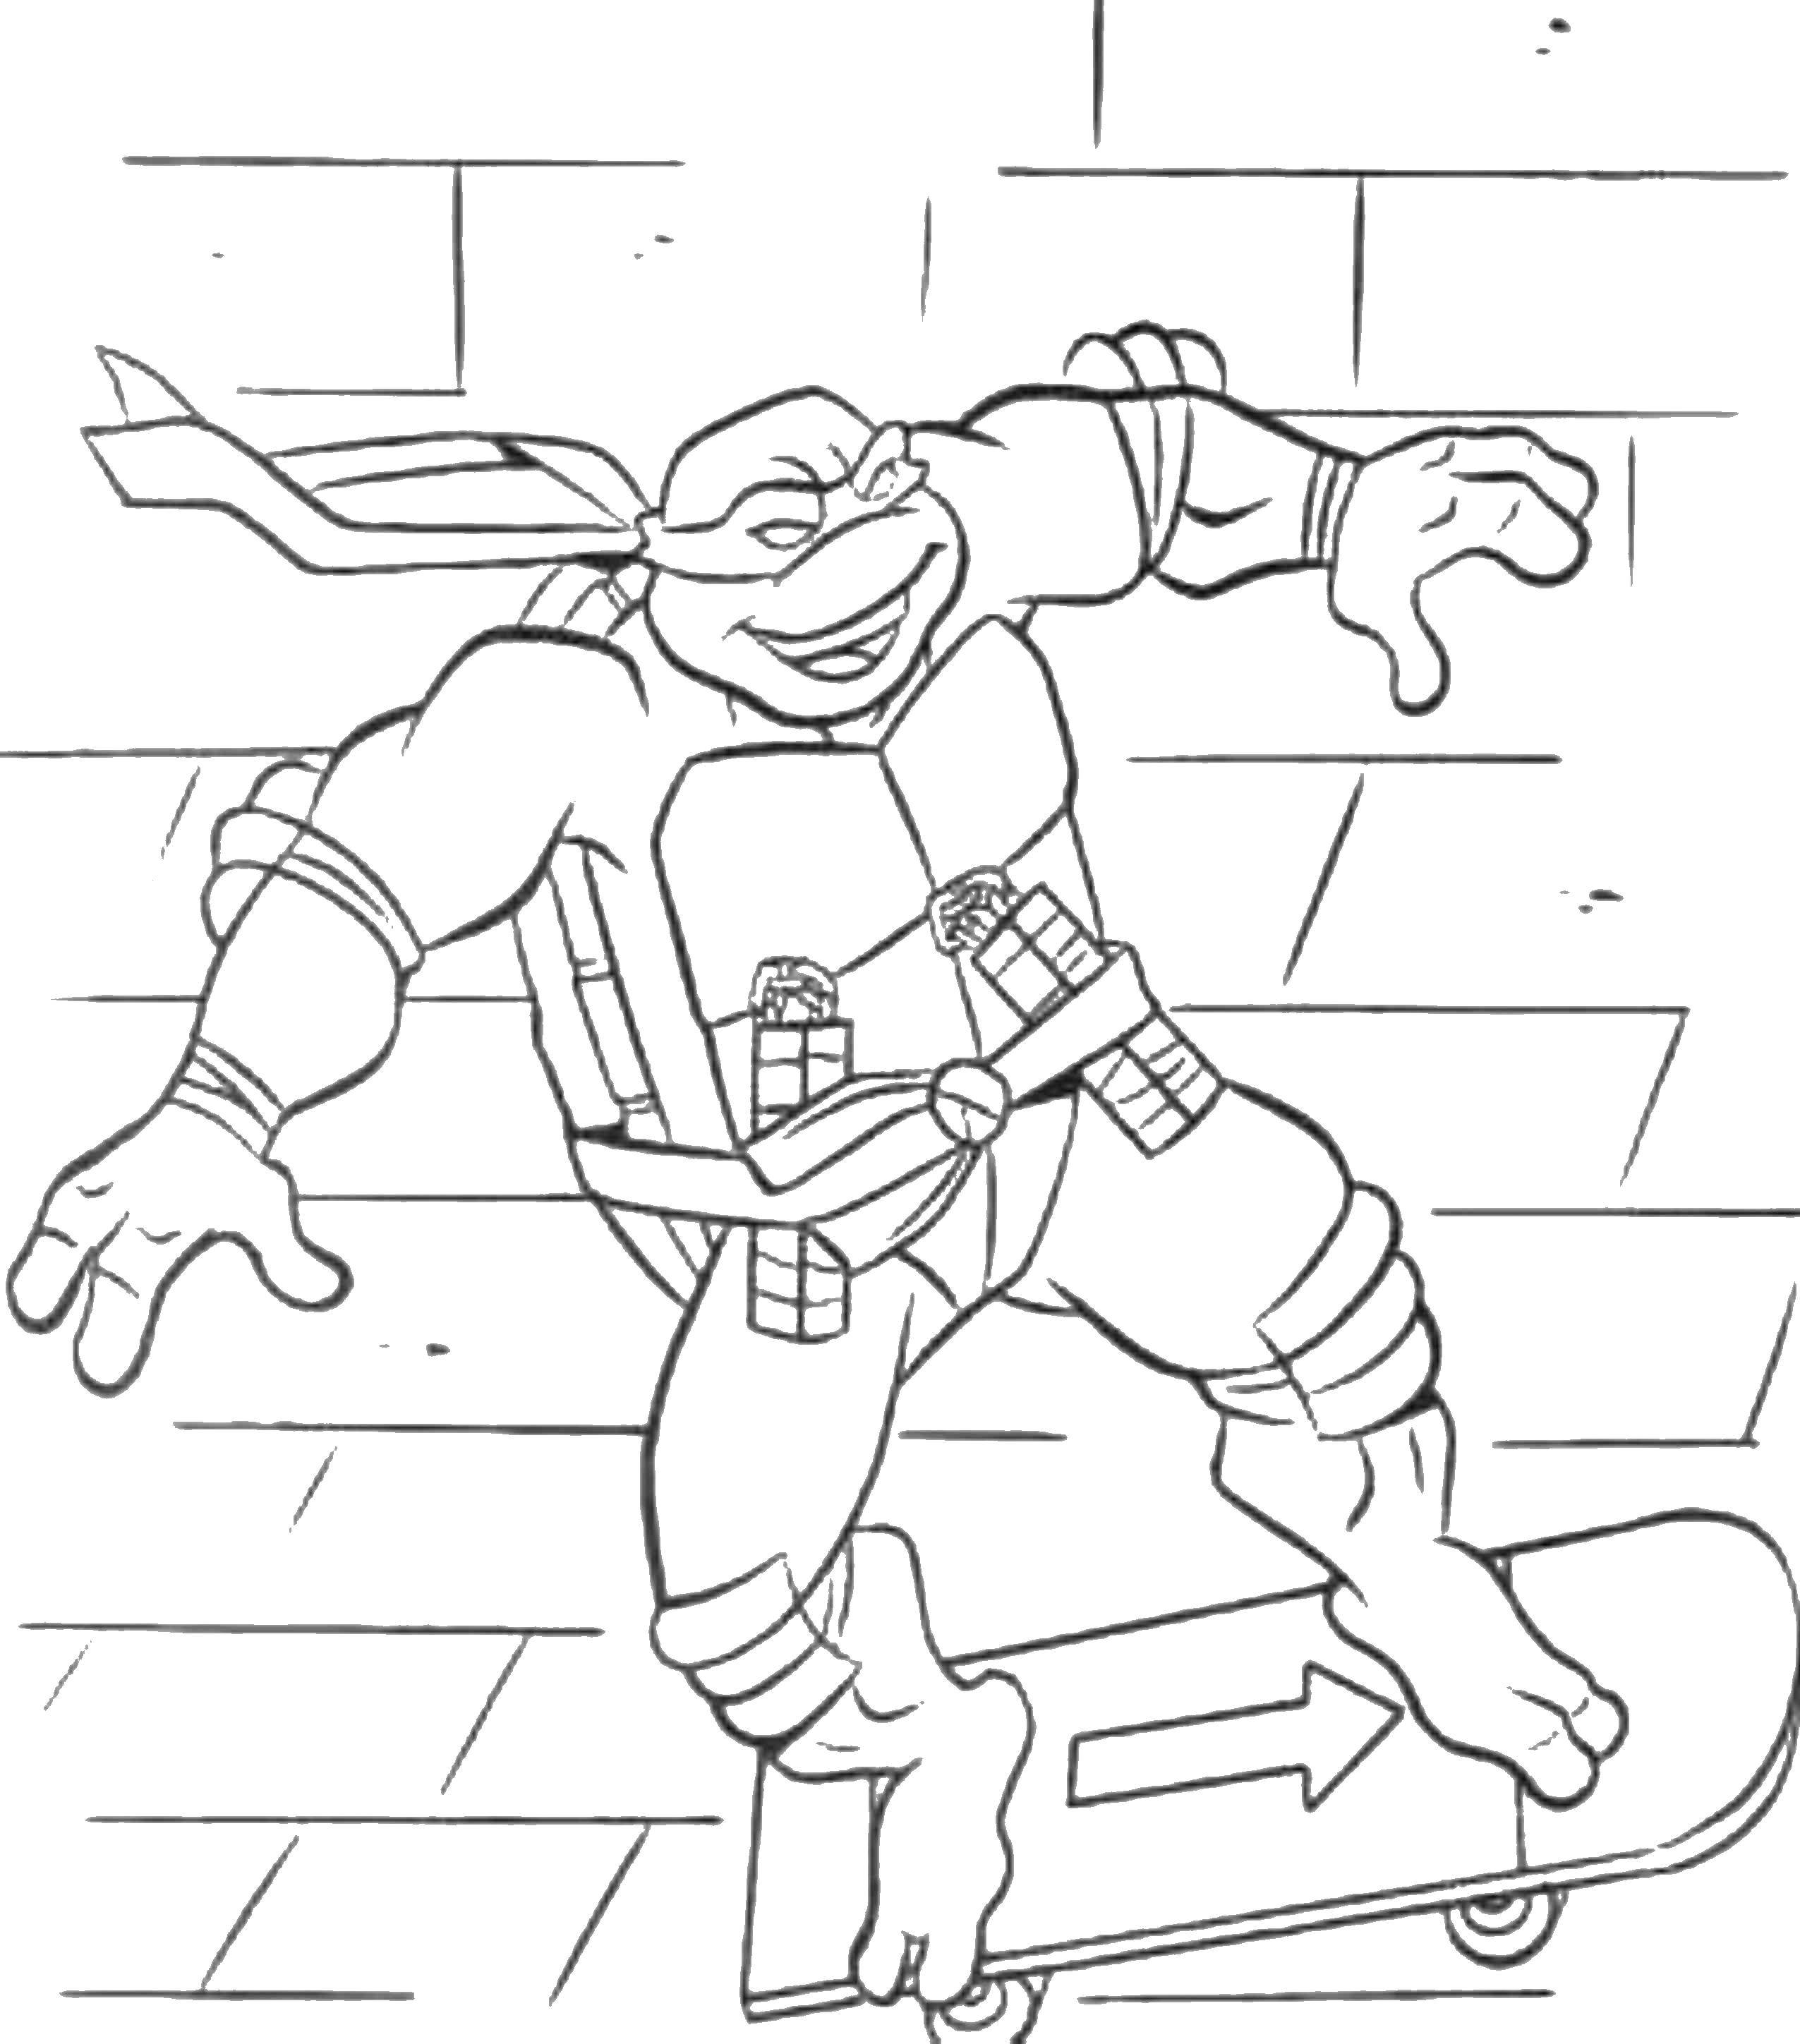 Coloring Michelangelo loves skateboards. Category teenage mutant ninja turtles. Tags:  Comics, Teenage Mutant Ninja Turtles.